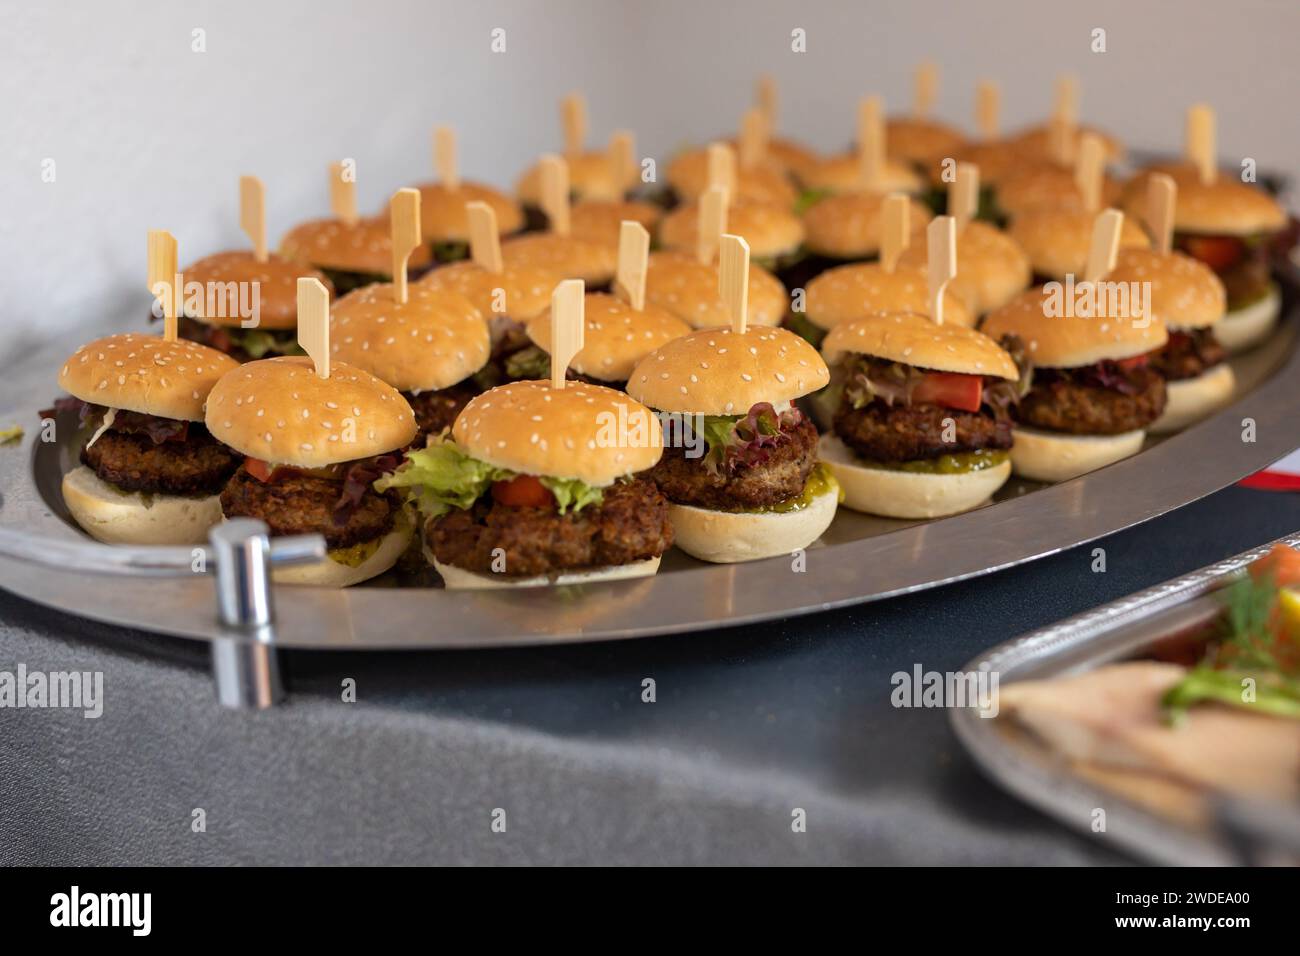 Hamburger in Klein vom Catering Service Stock Photo